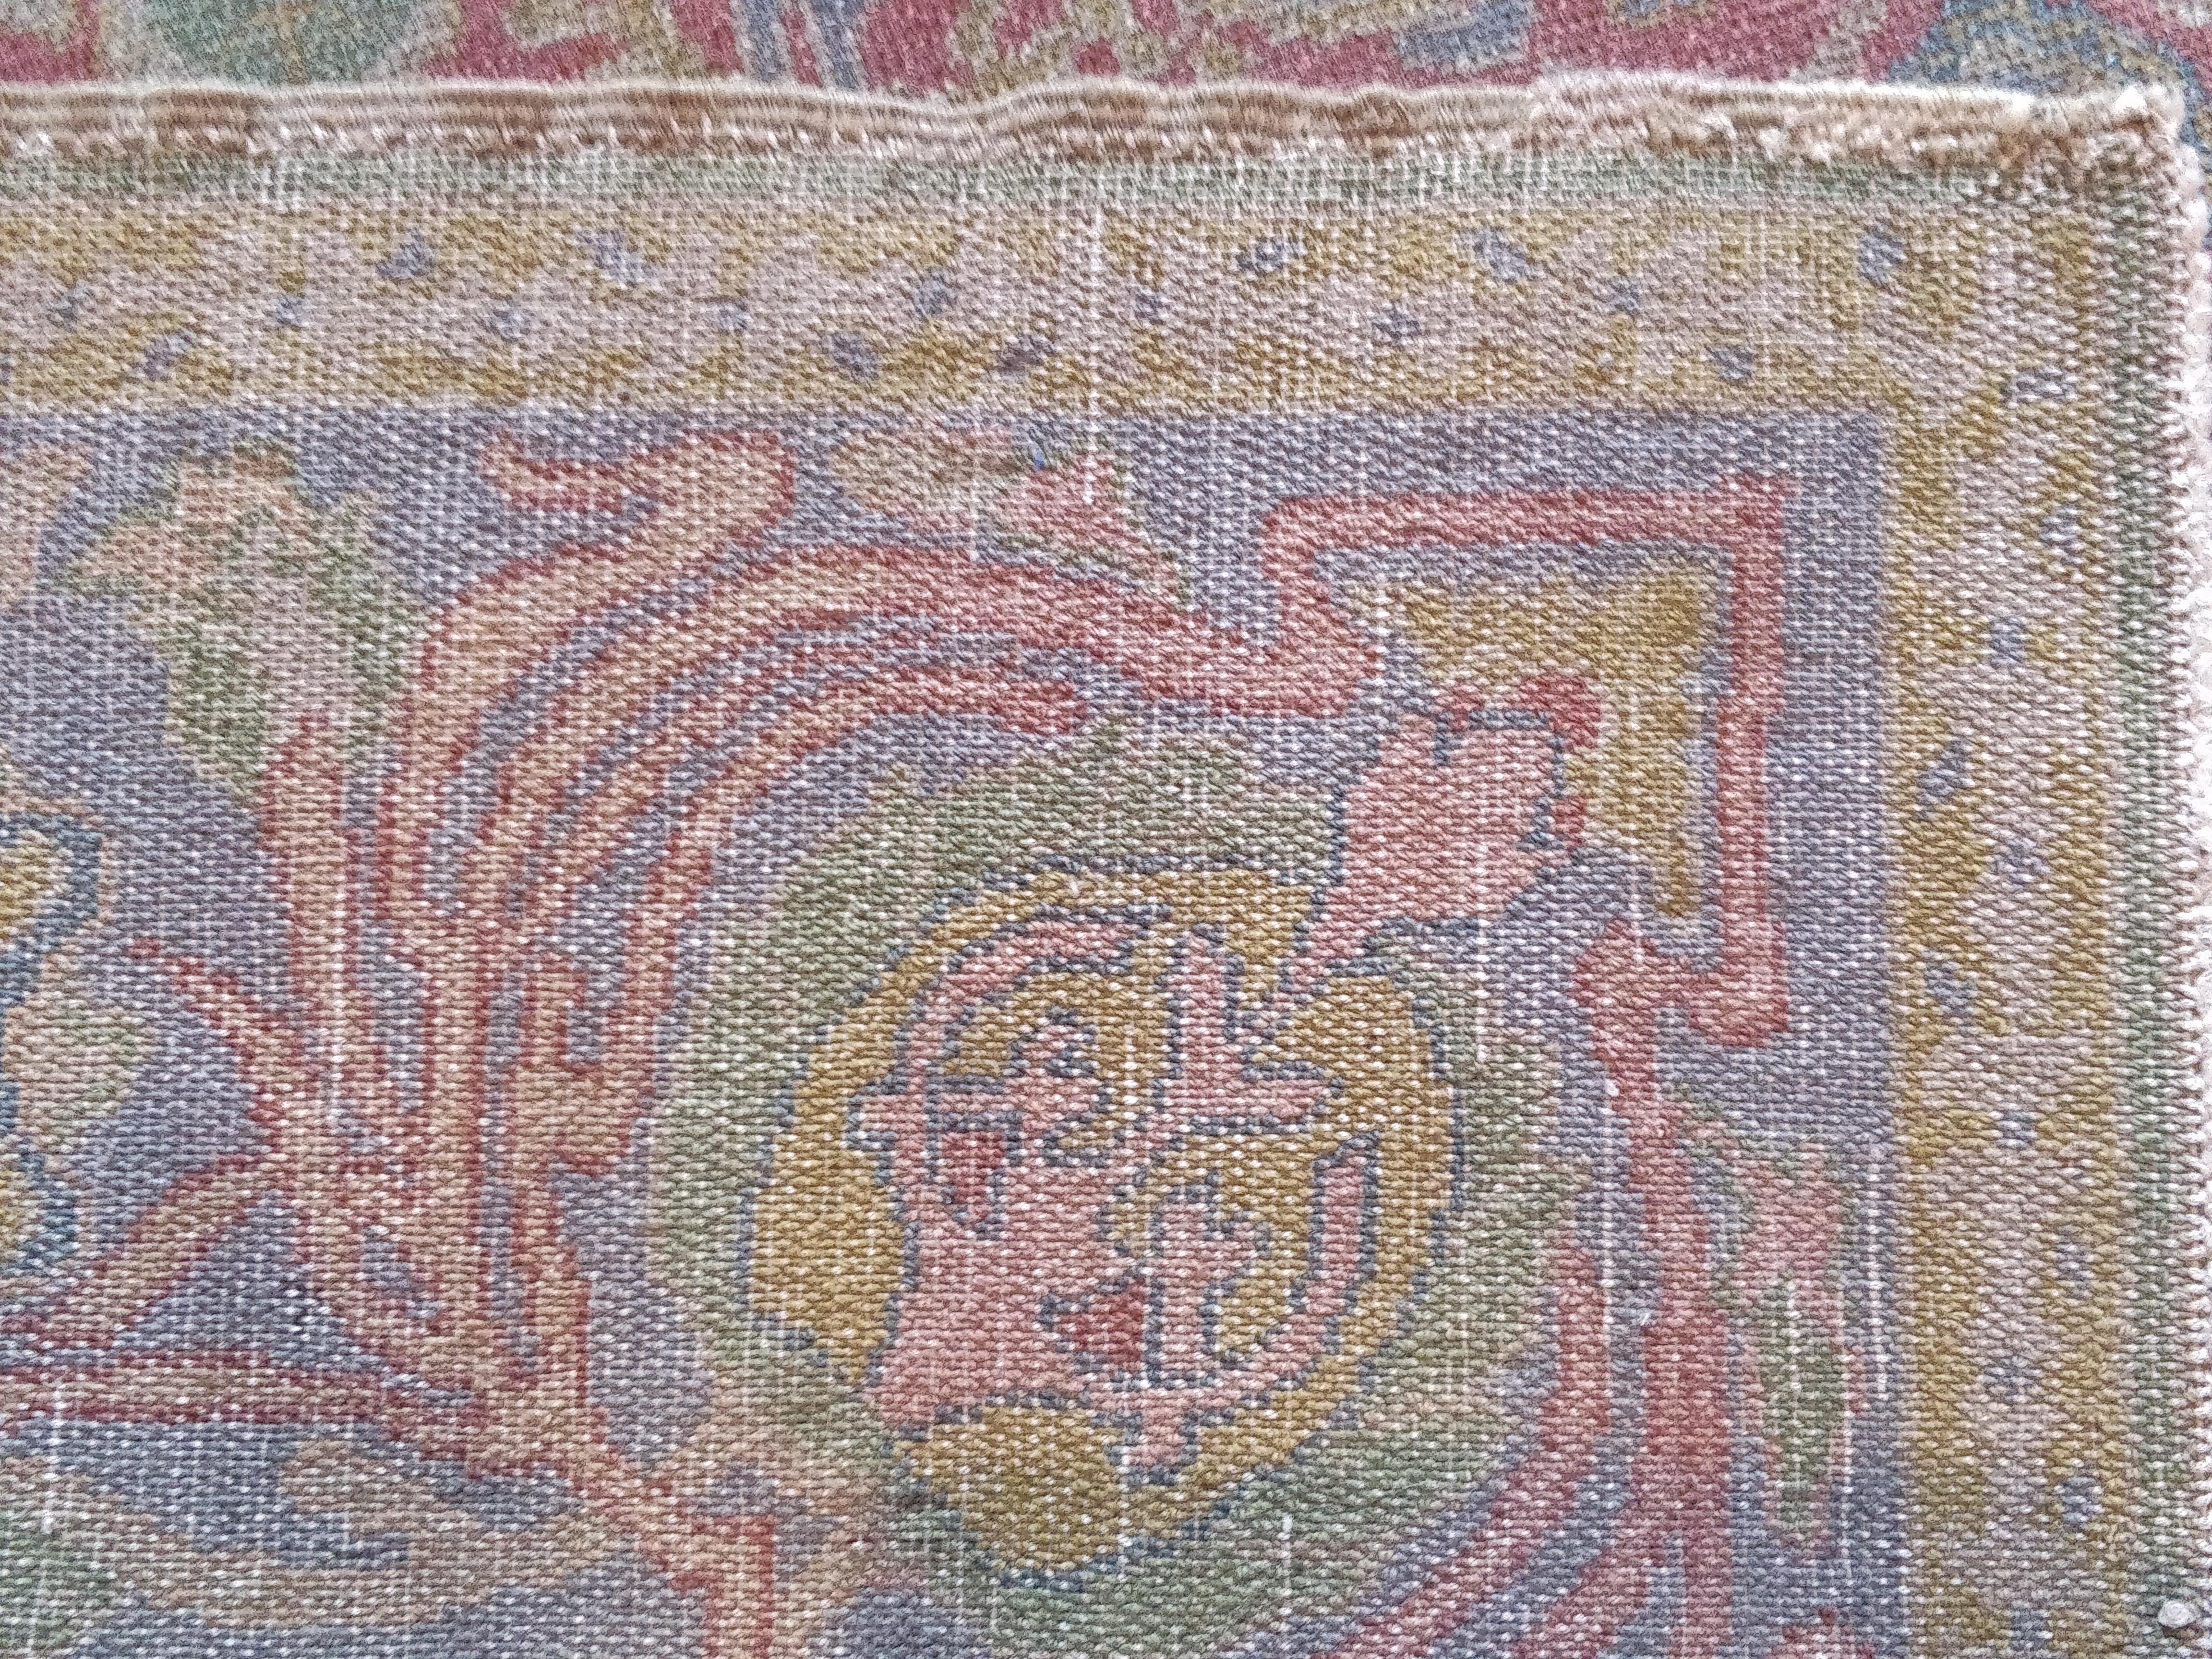 Wool Antique Israel Bezalel Carpet with Judaica Symbols For Sale